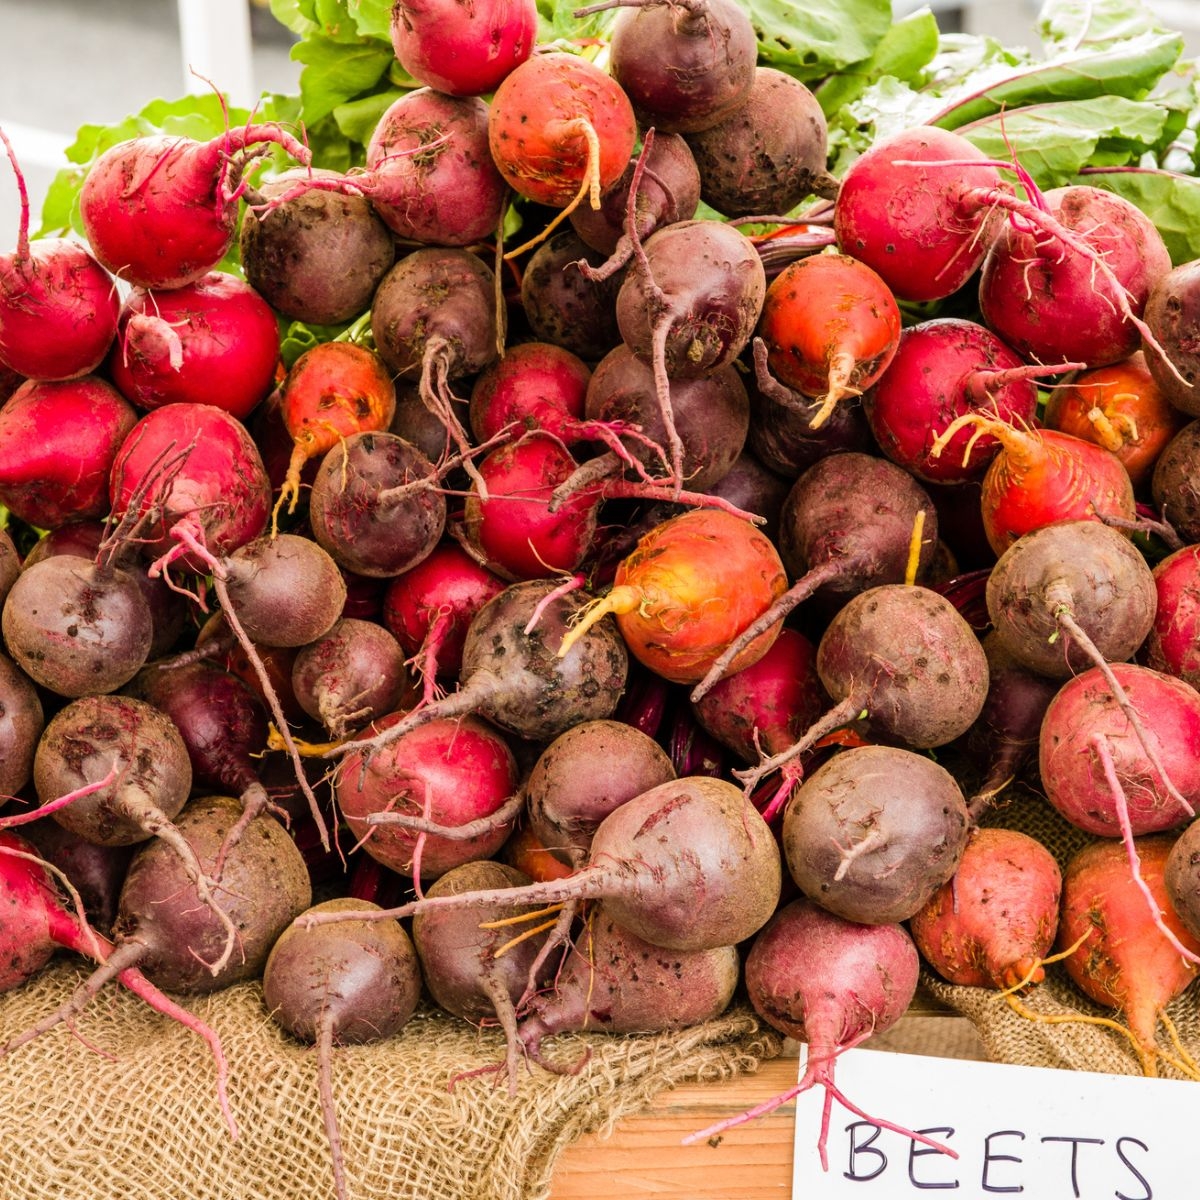 What Do Beets Taste Like? - Good Recipe Ideas